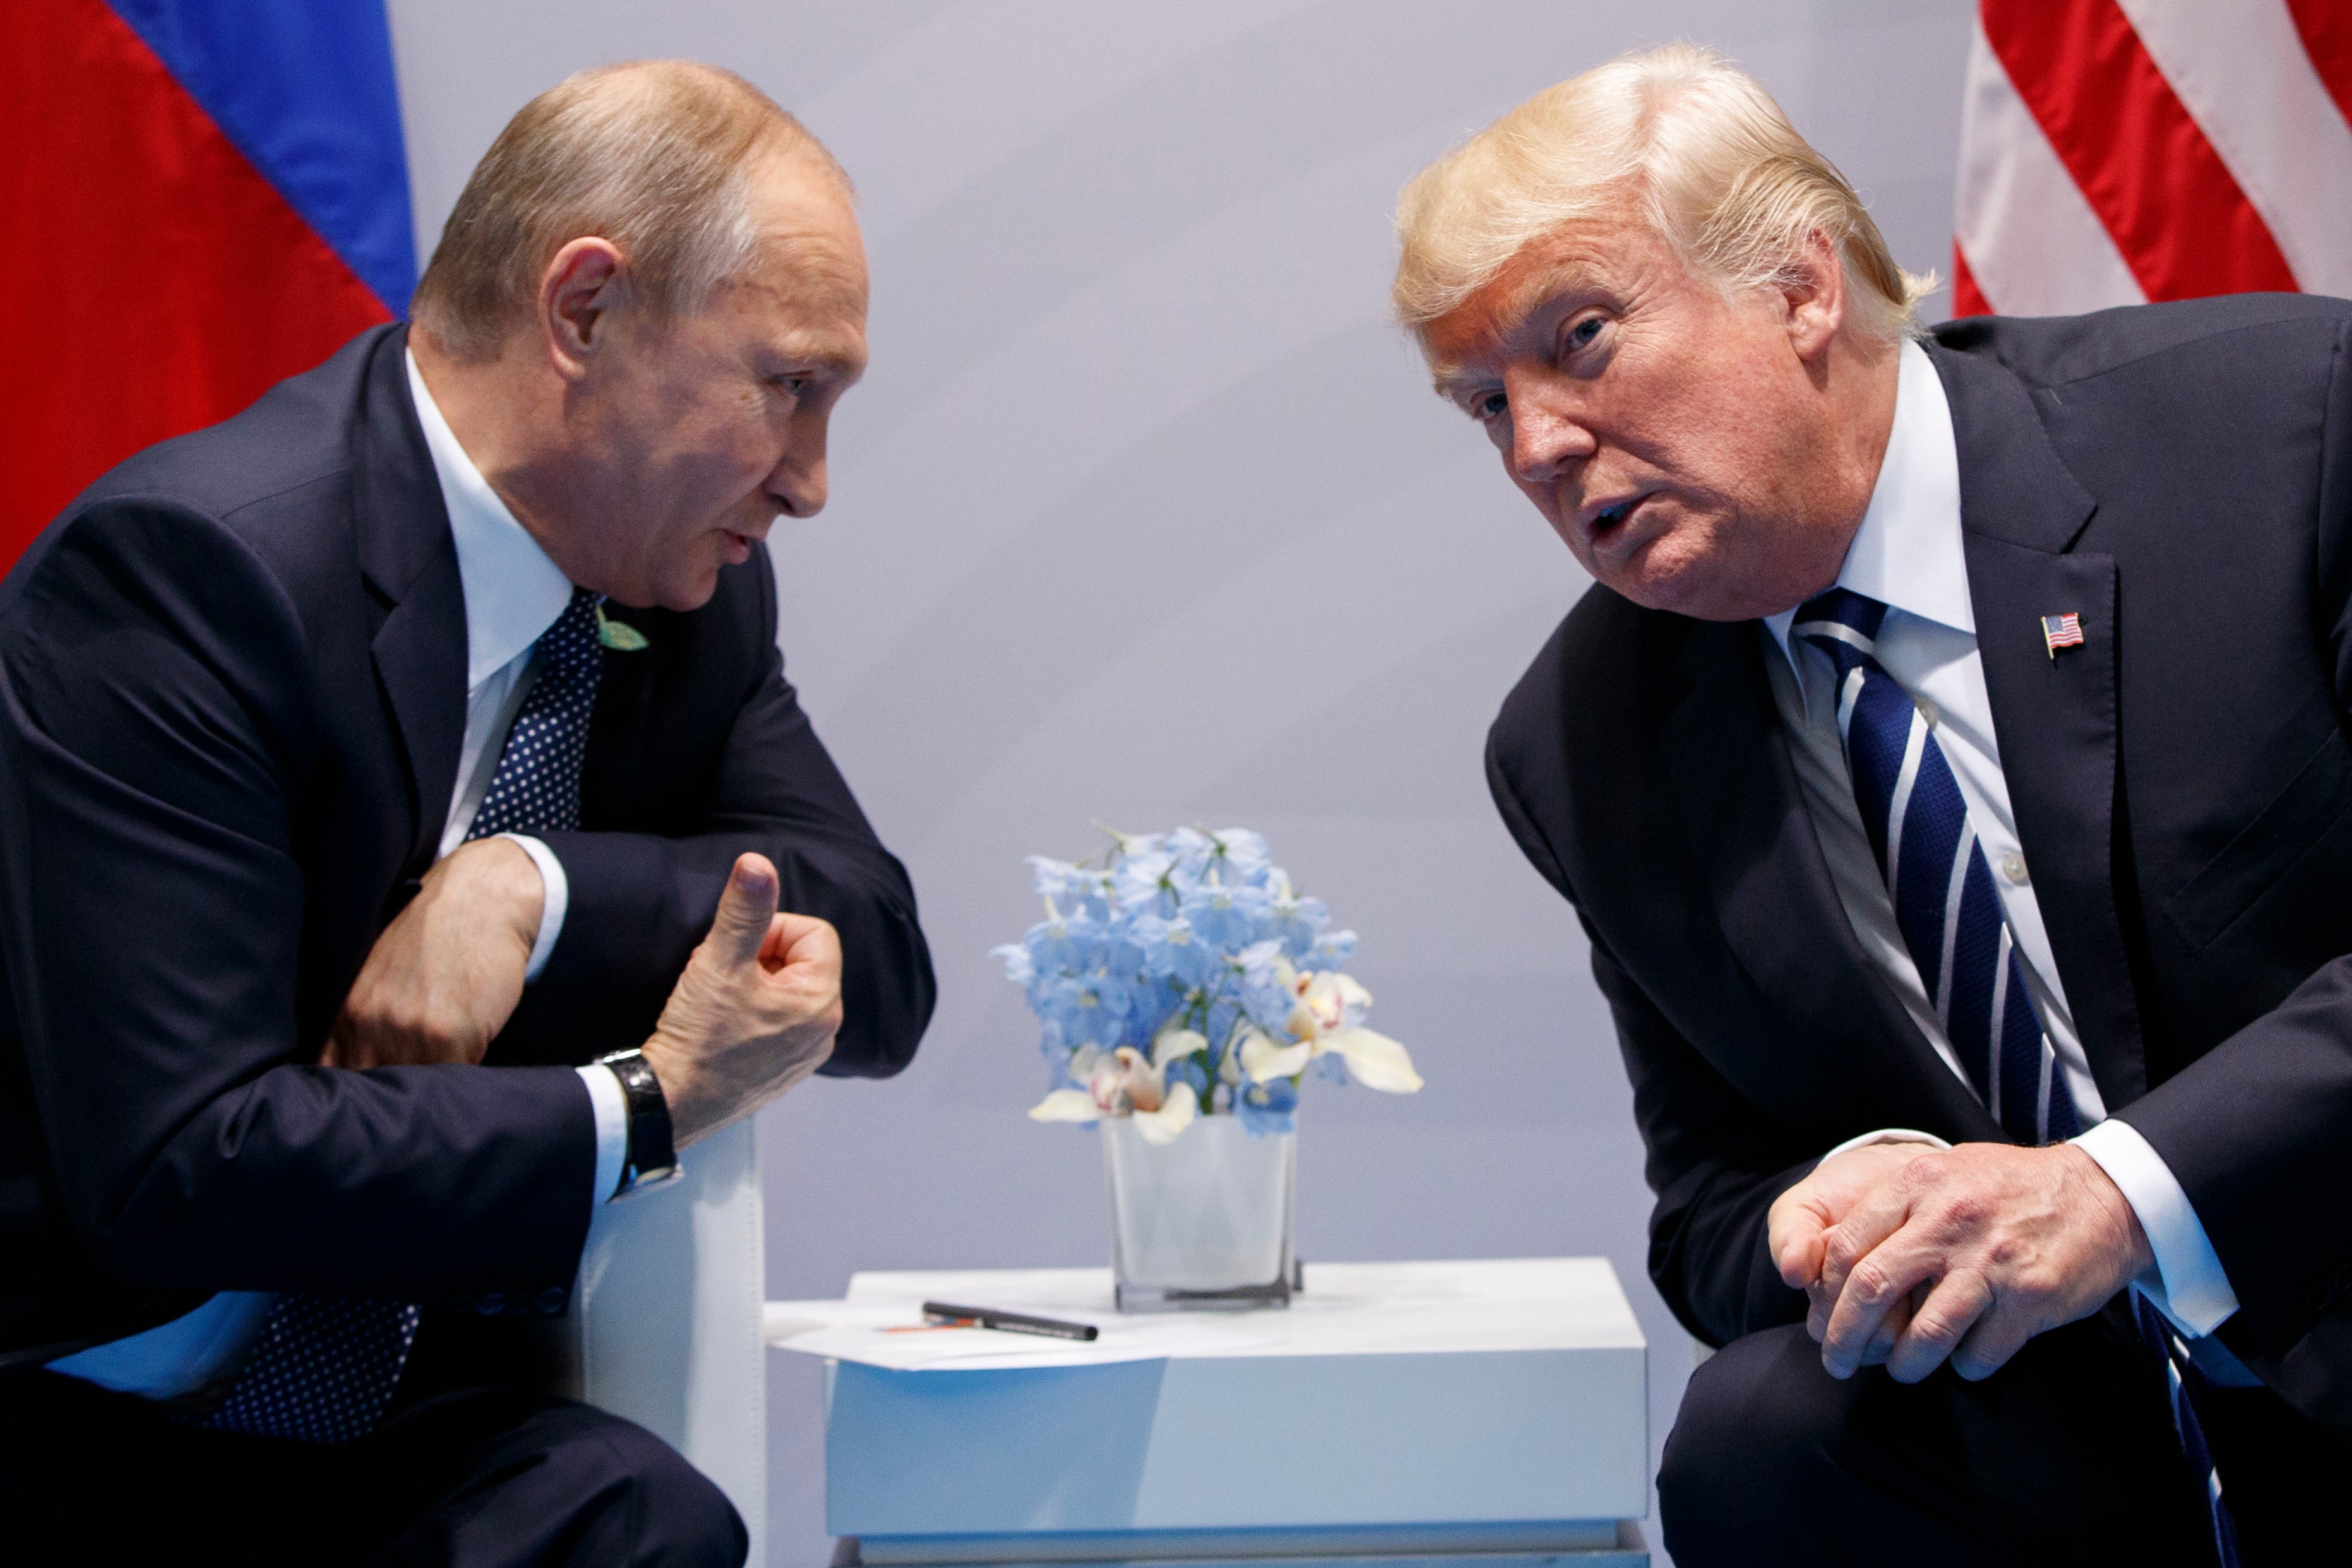 President Donald Trump meets with Russian President Vladimir Putin at the G-20 Summit in Hamburg, Germany